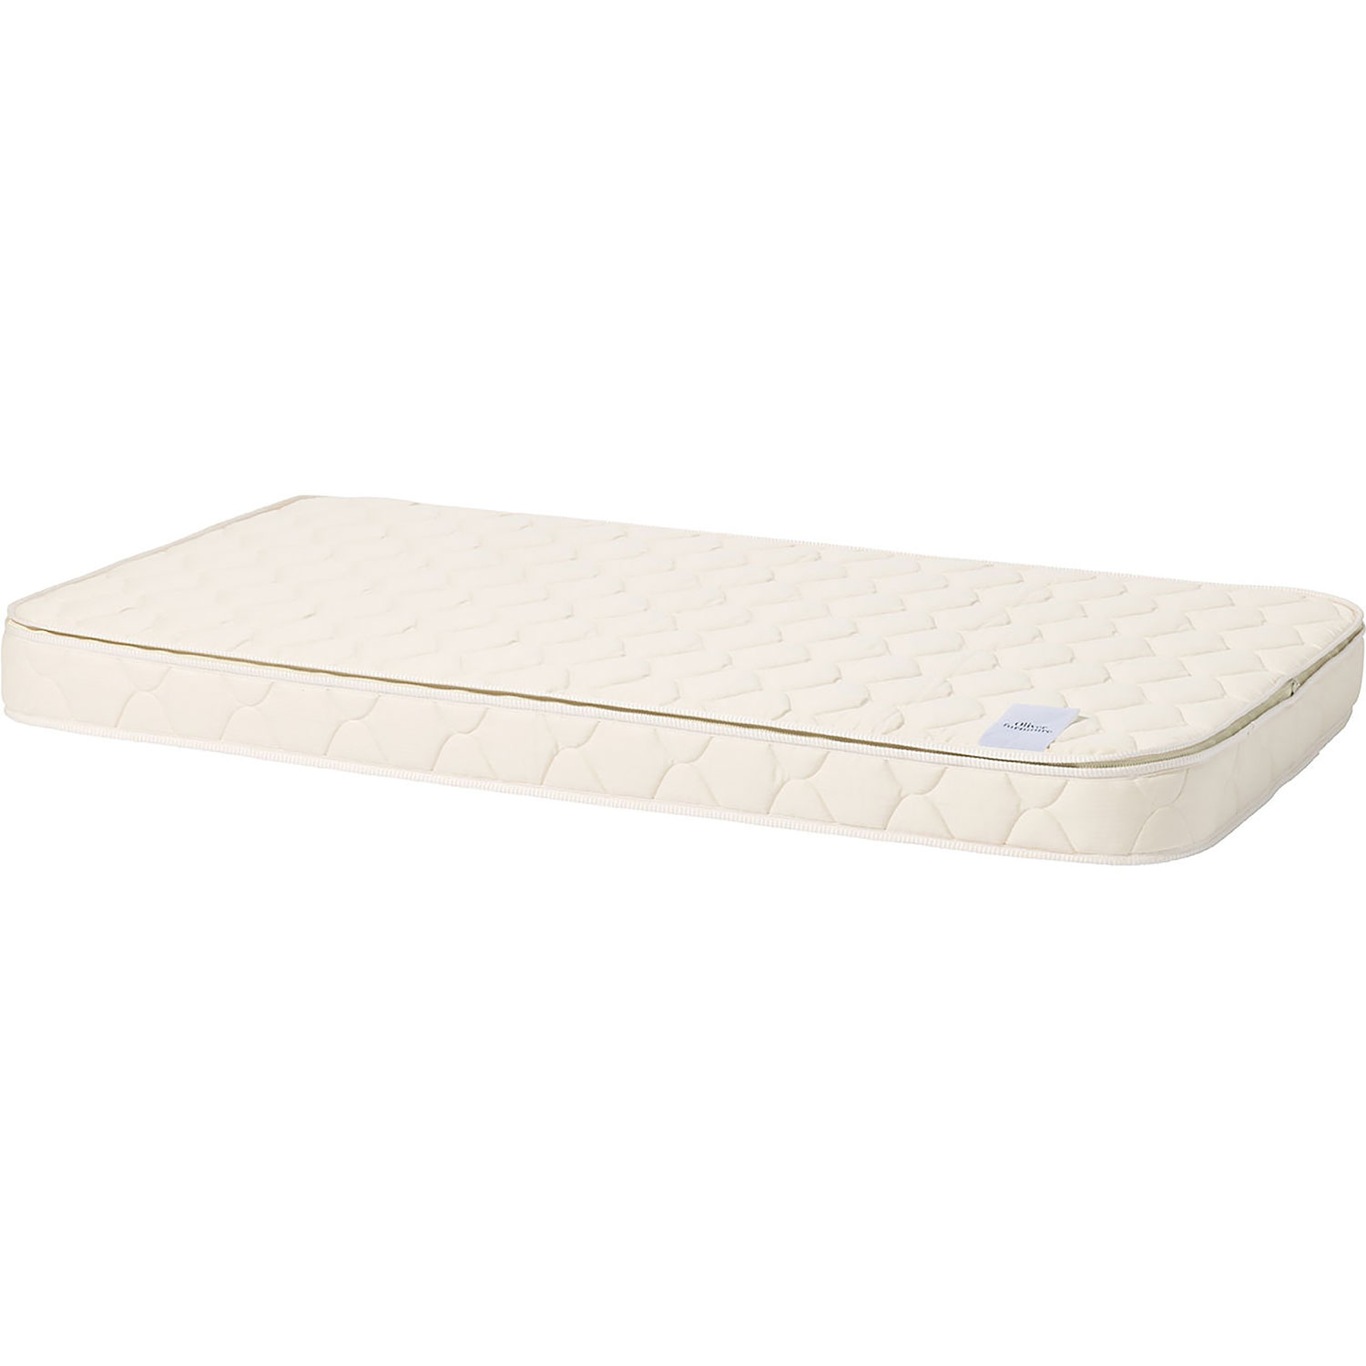 Wood mattress, Jr. Bed (160cm)